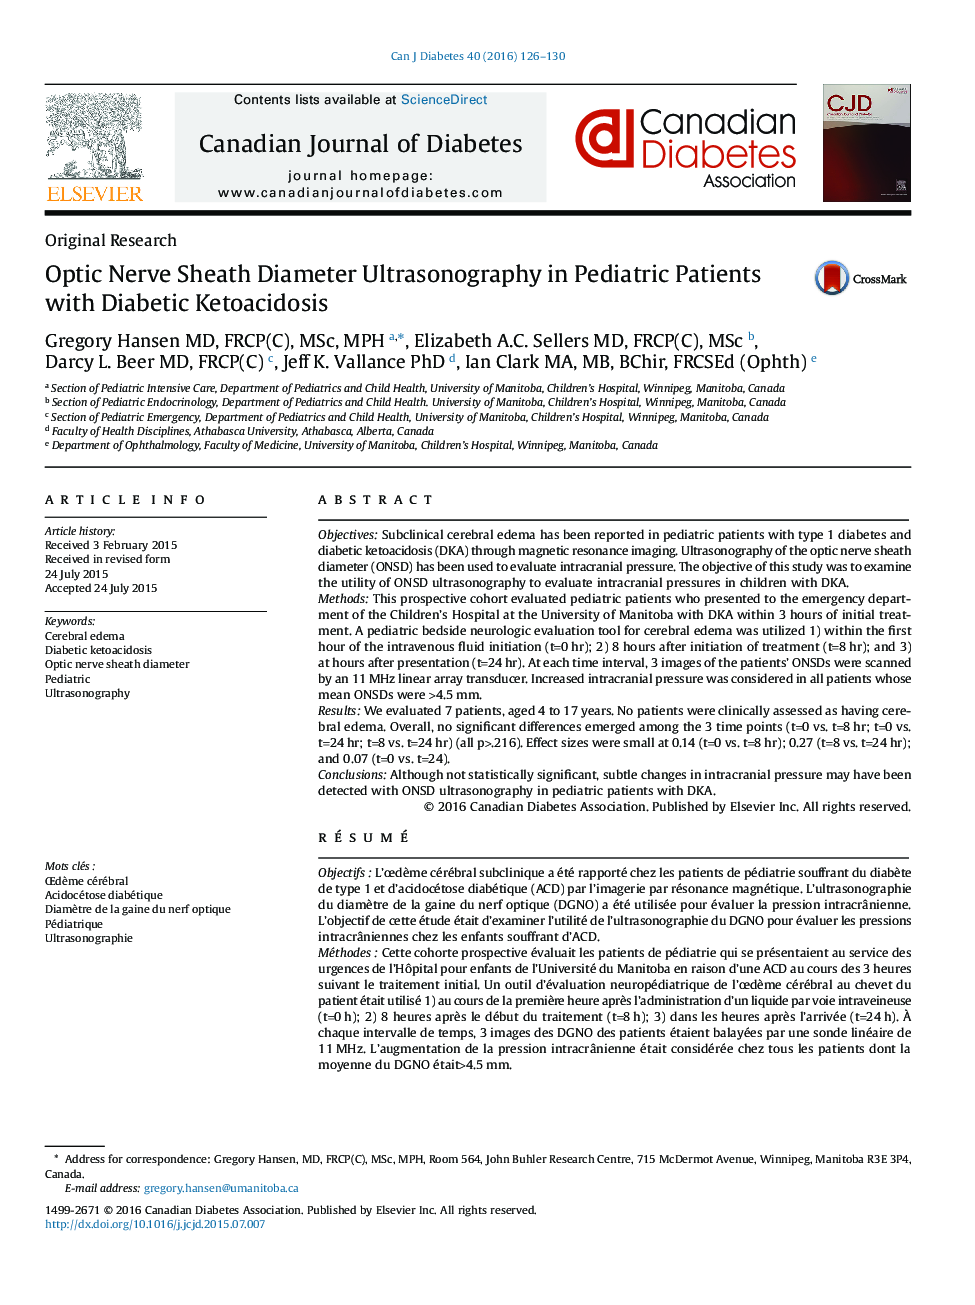 Optic Nerve Sheath Diameter Ultrasonography in Pediatric Patients with Diabetic Ketoacidosis